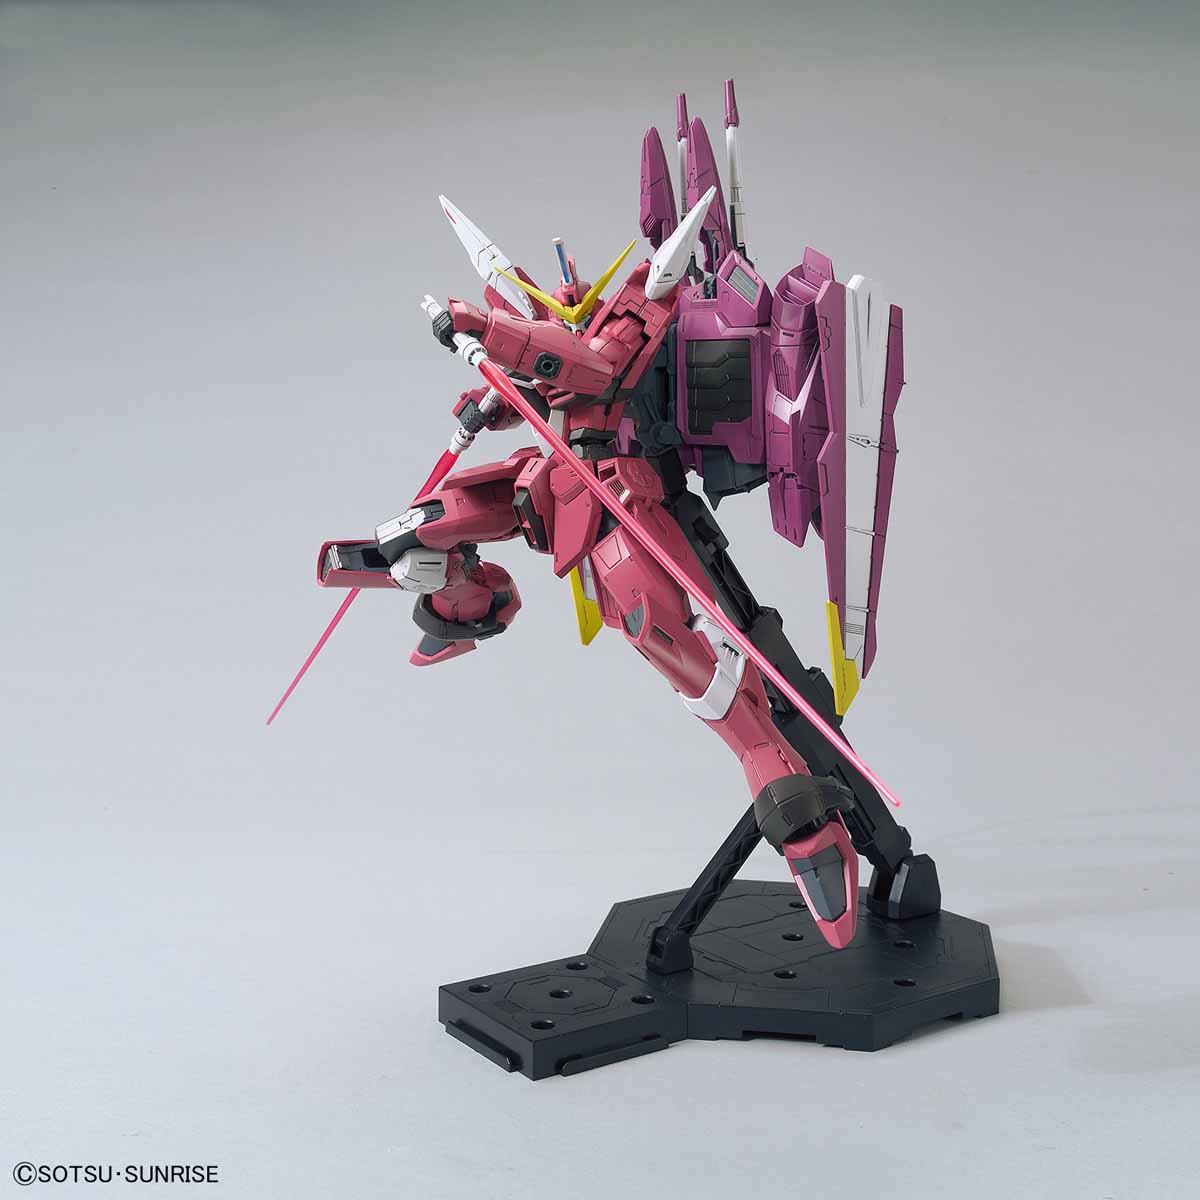 New Photos Added Bandai 17年6月22日發售 模型 Mg 1 100 Justice Gundam 4 800yen hobby Com